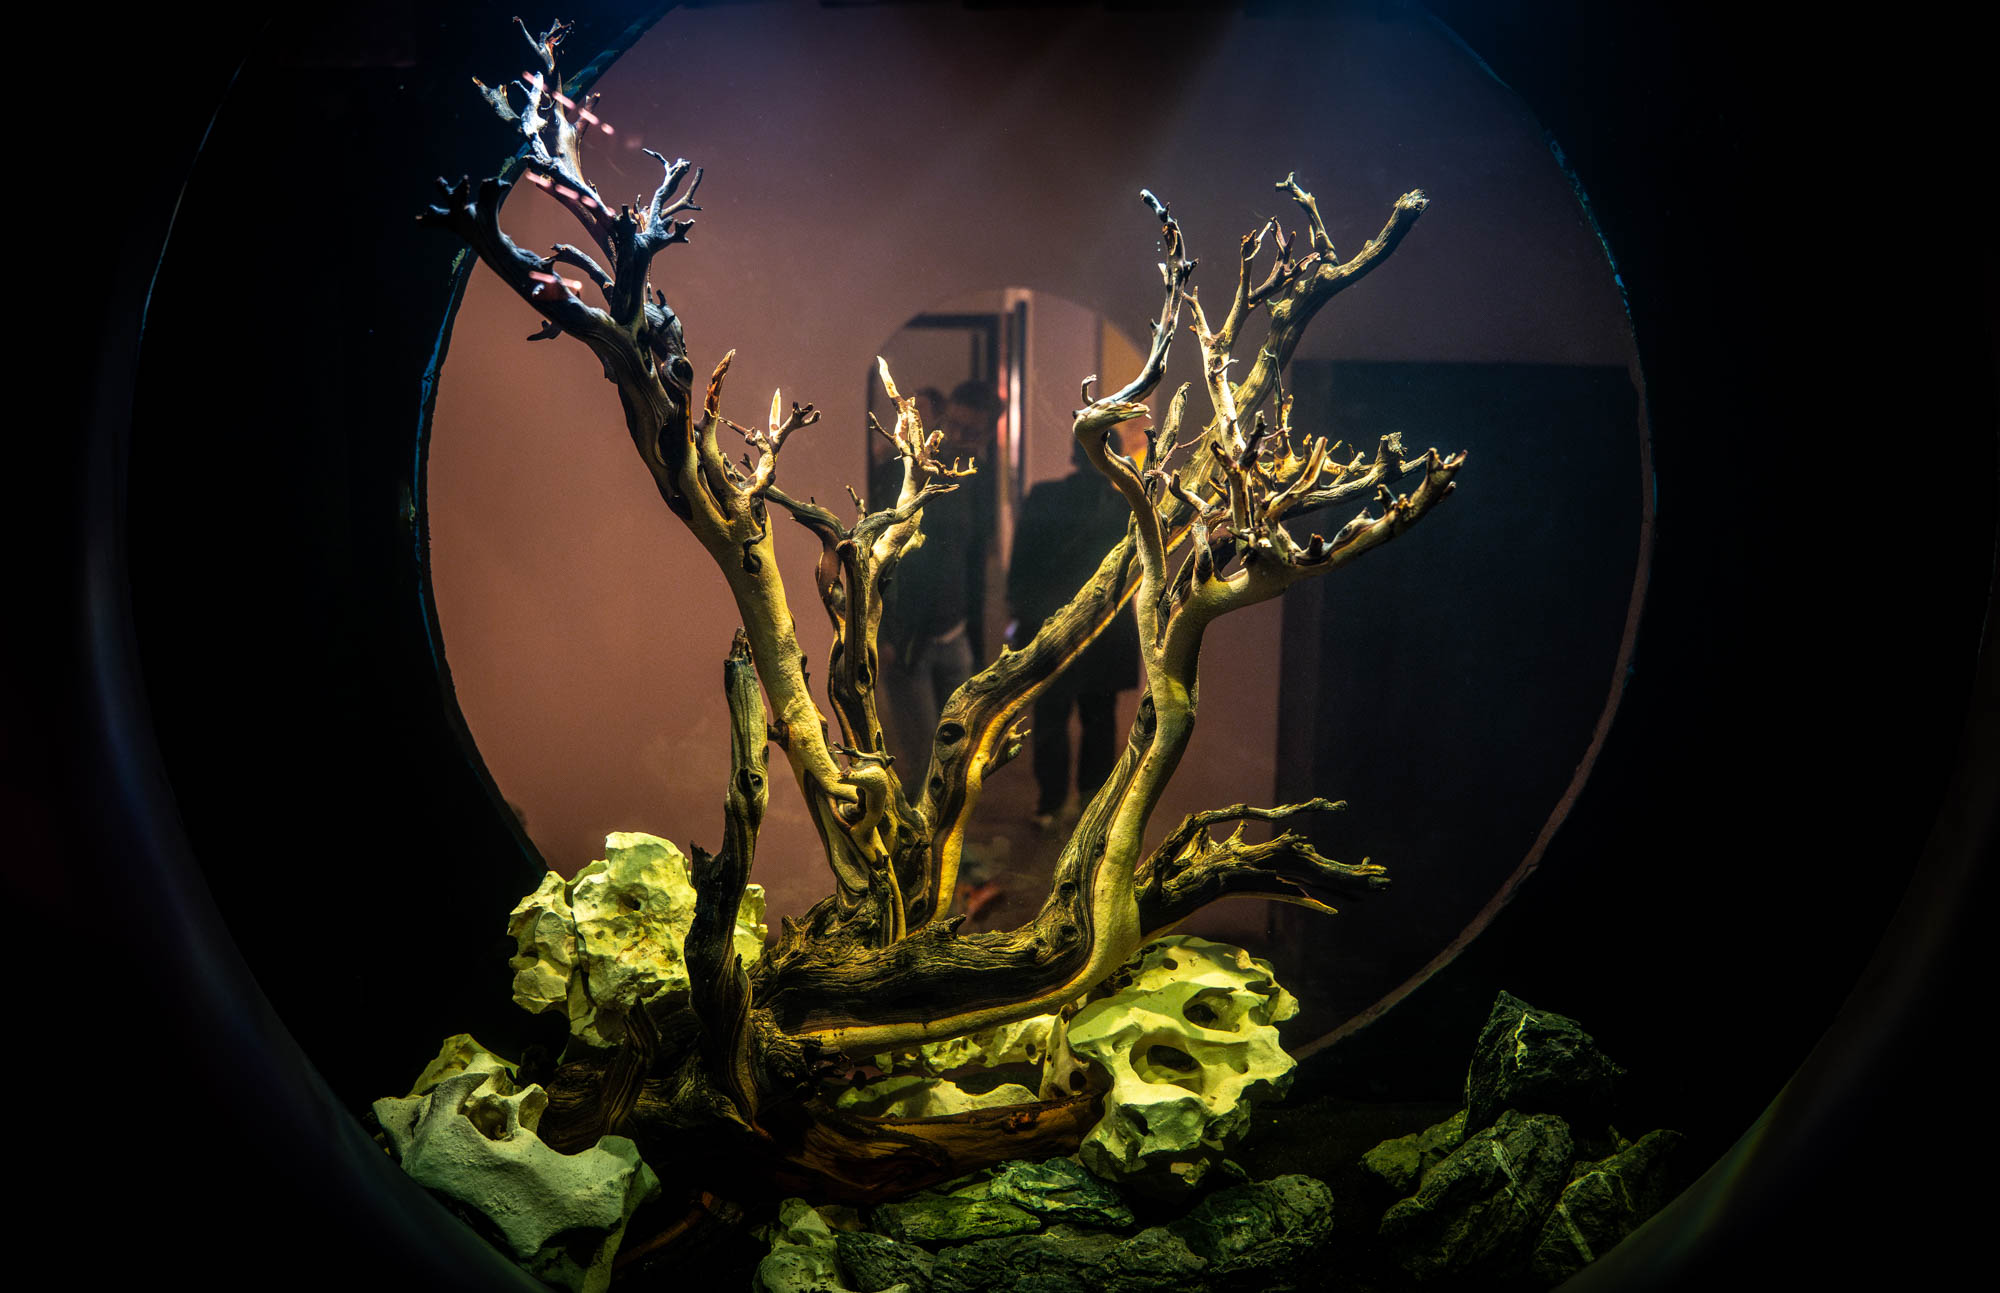 An art piece made of wood and rocks inside an aquarium-like tank